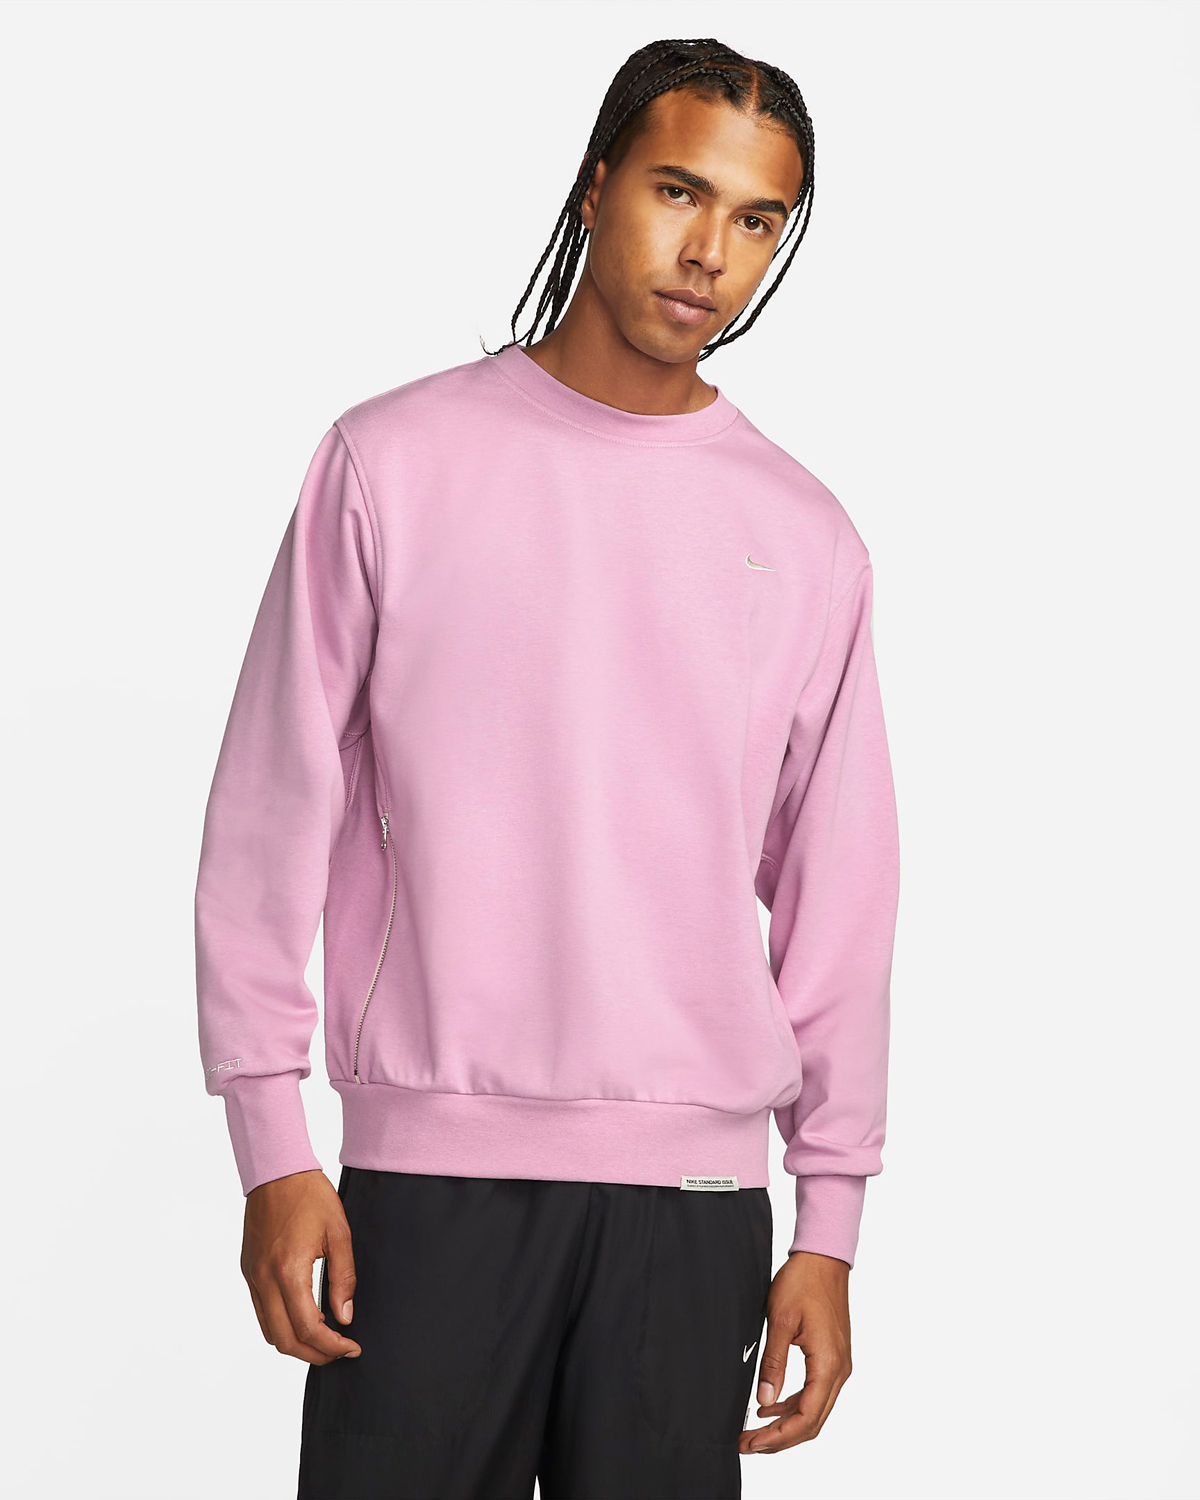 Nike-Standard-Issue-Crew-Sweatshirt-Orchid-Pink